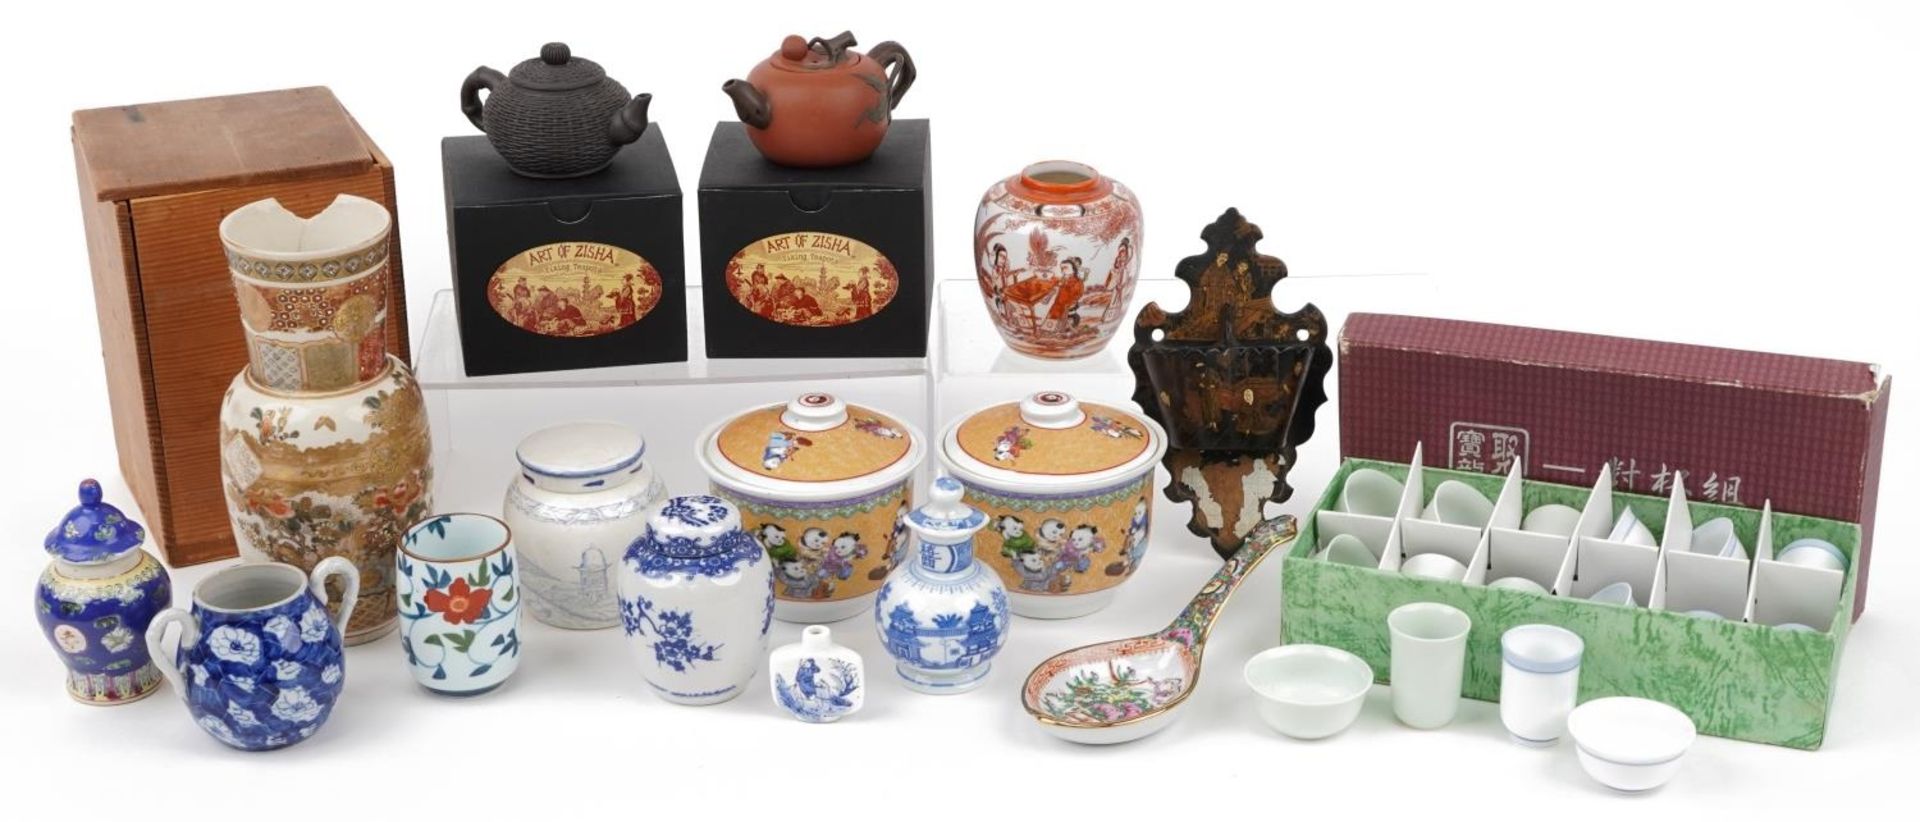 Chinese and Japanese ceramics including Satsuma vase, blue and white porcelain ginger jar and